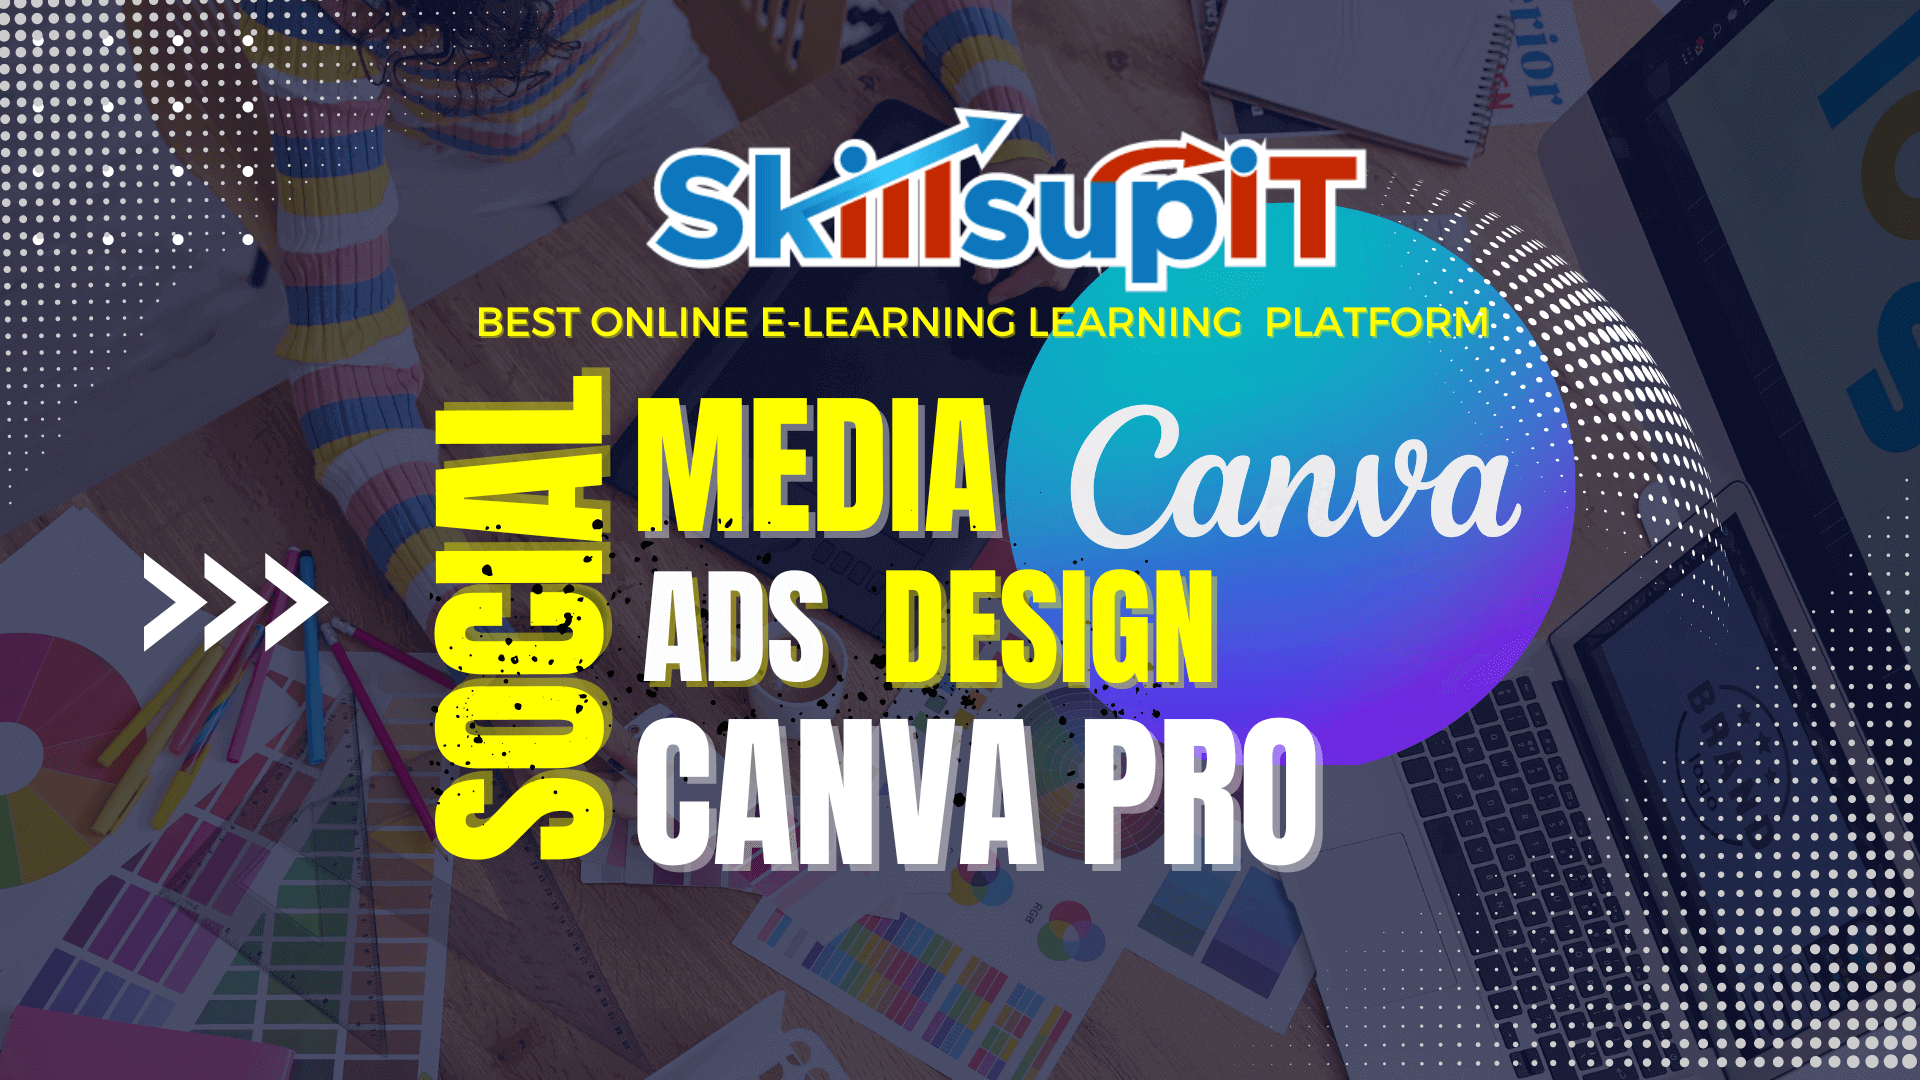 Social Media Ads Design by Canva Pro